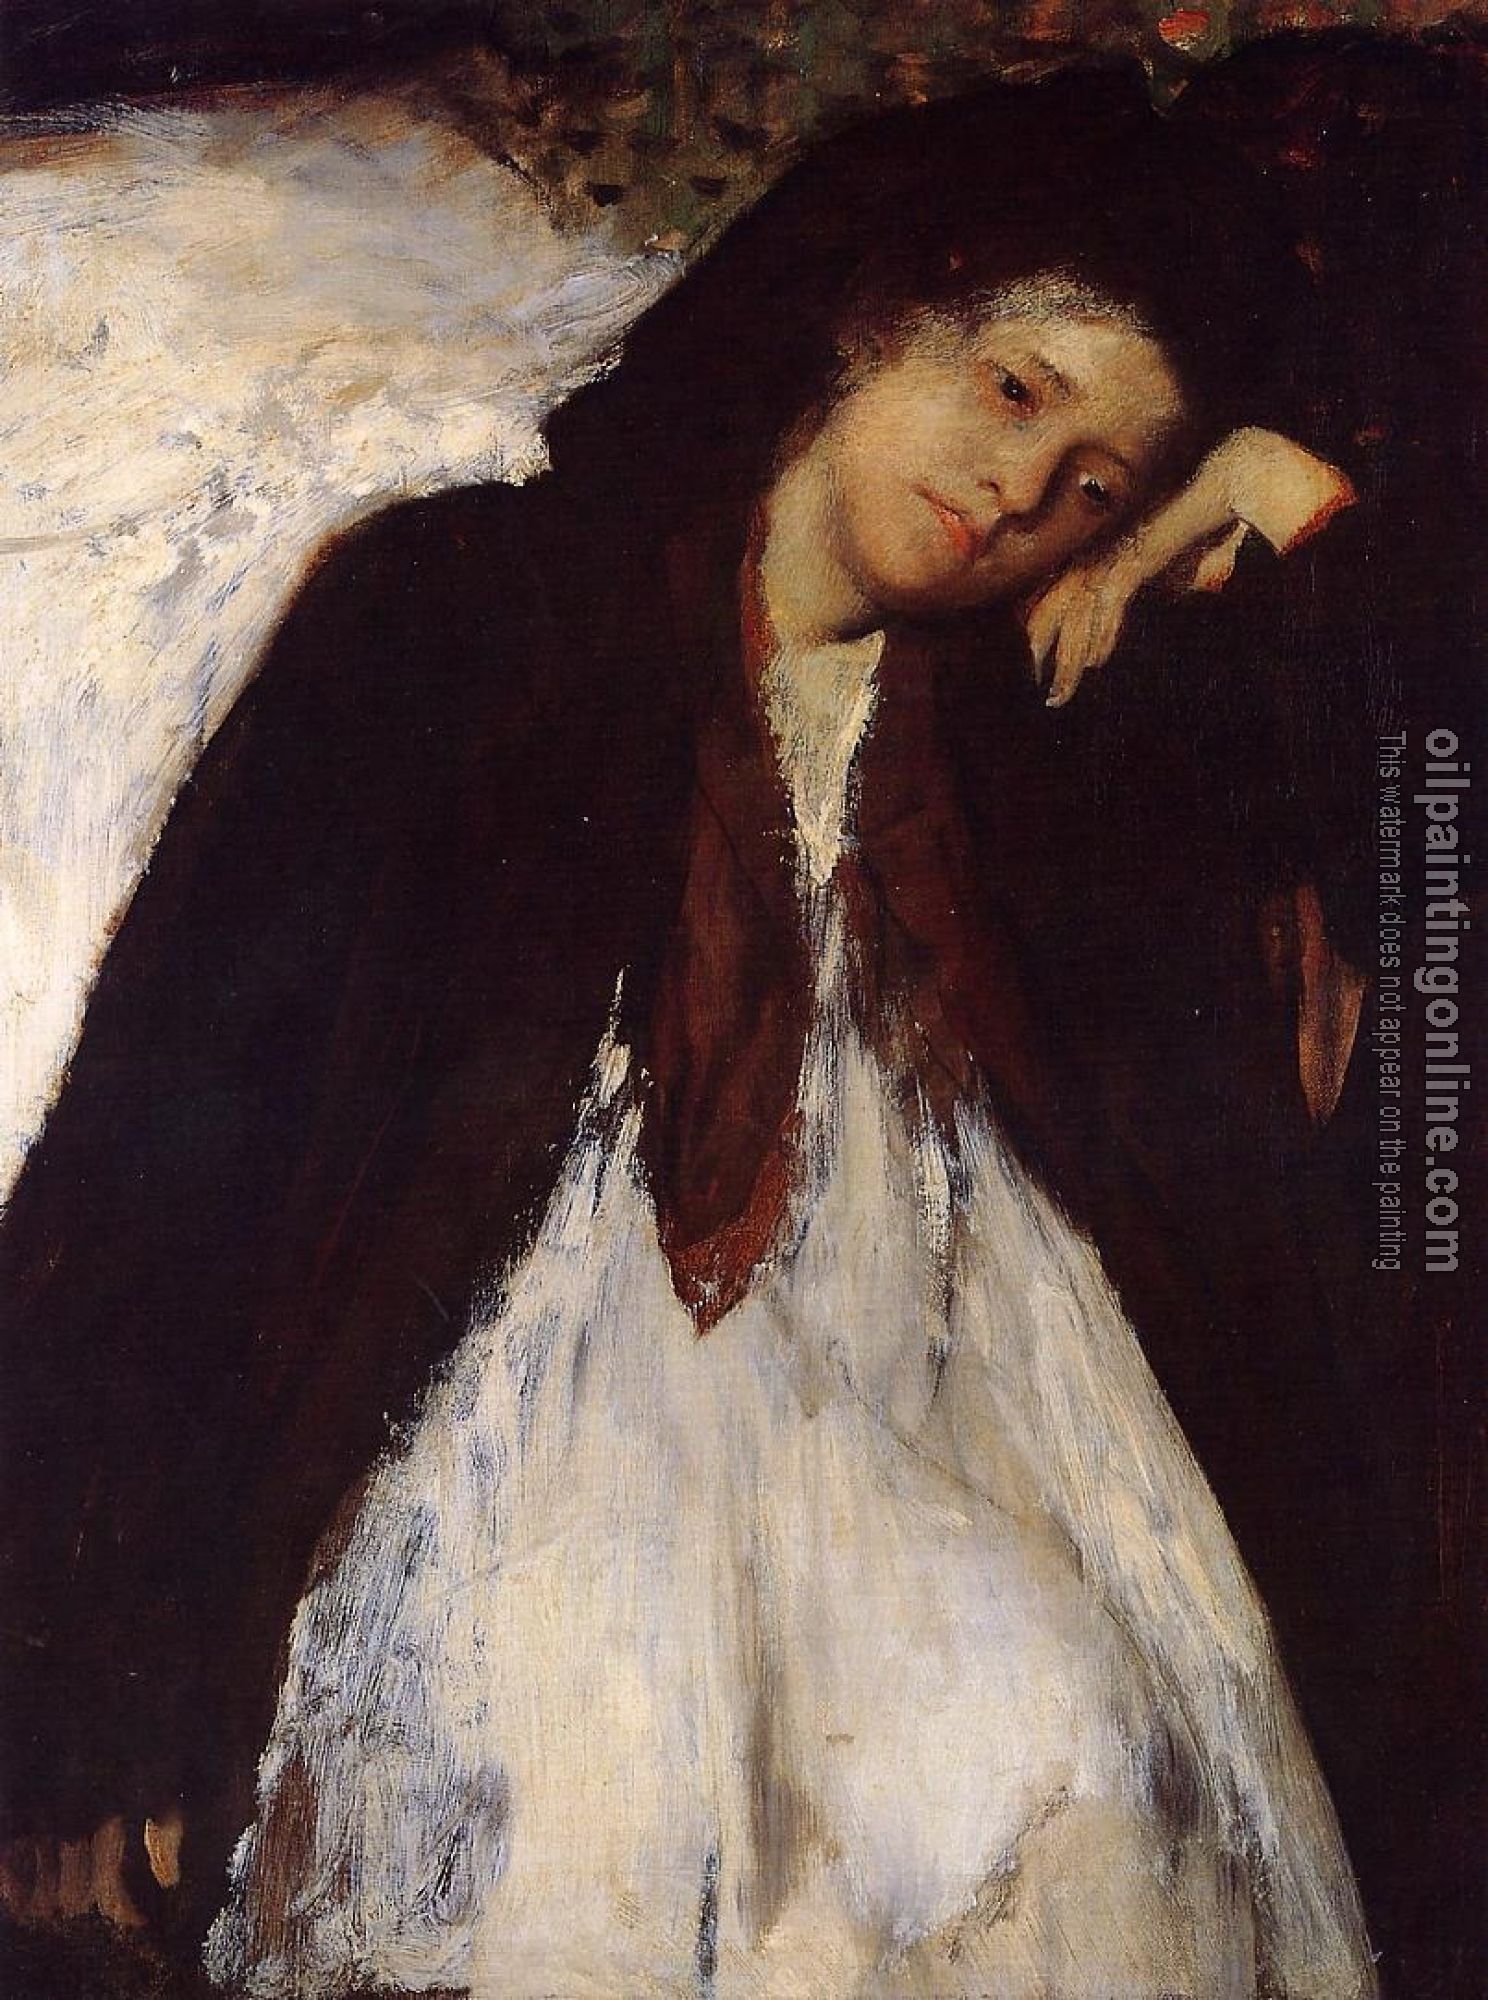 Degas, Edgar - The Invalid